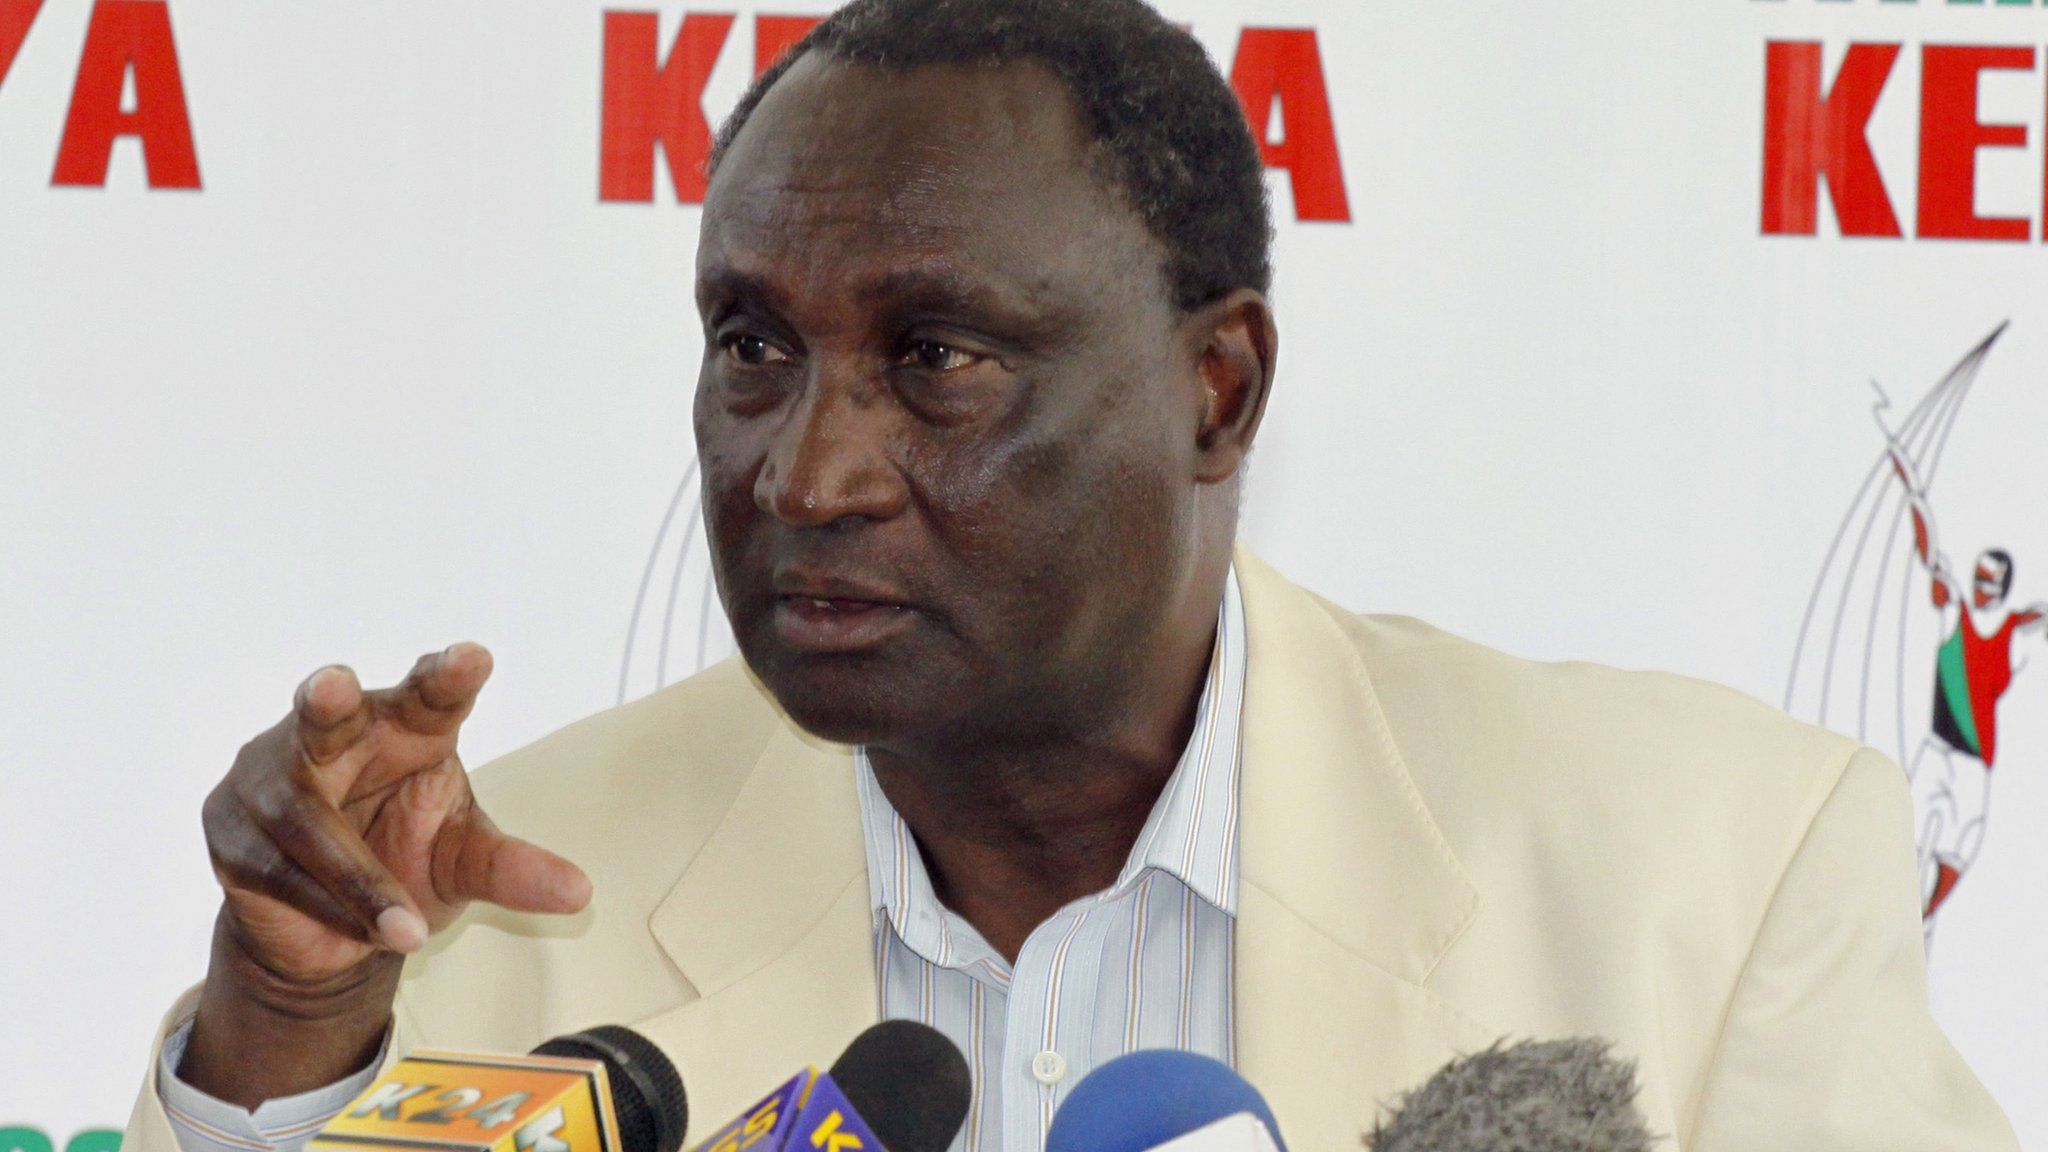 Kenya athletics president Isaiah Kiplagat